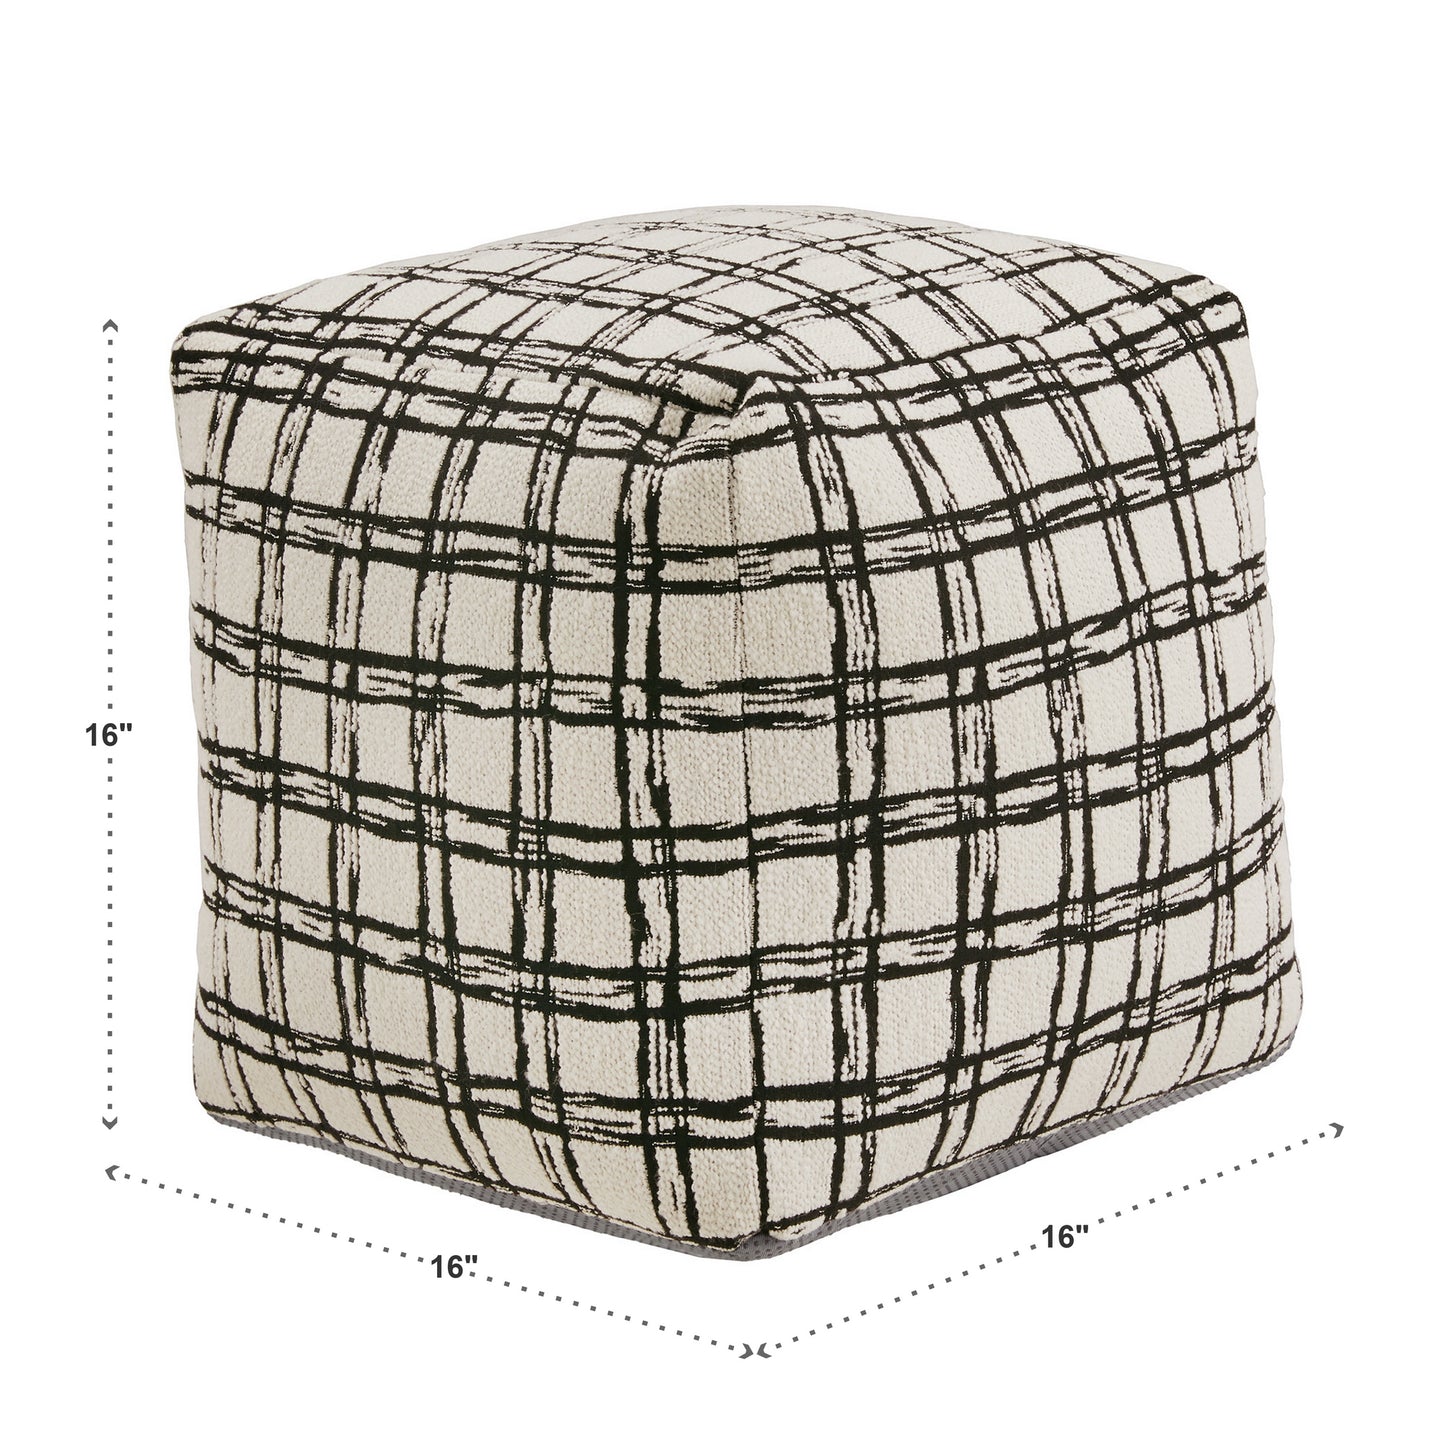 Upholstered Square Pouf Ottoman - Ivory & Black Plaid Pattern Fabric